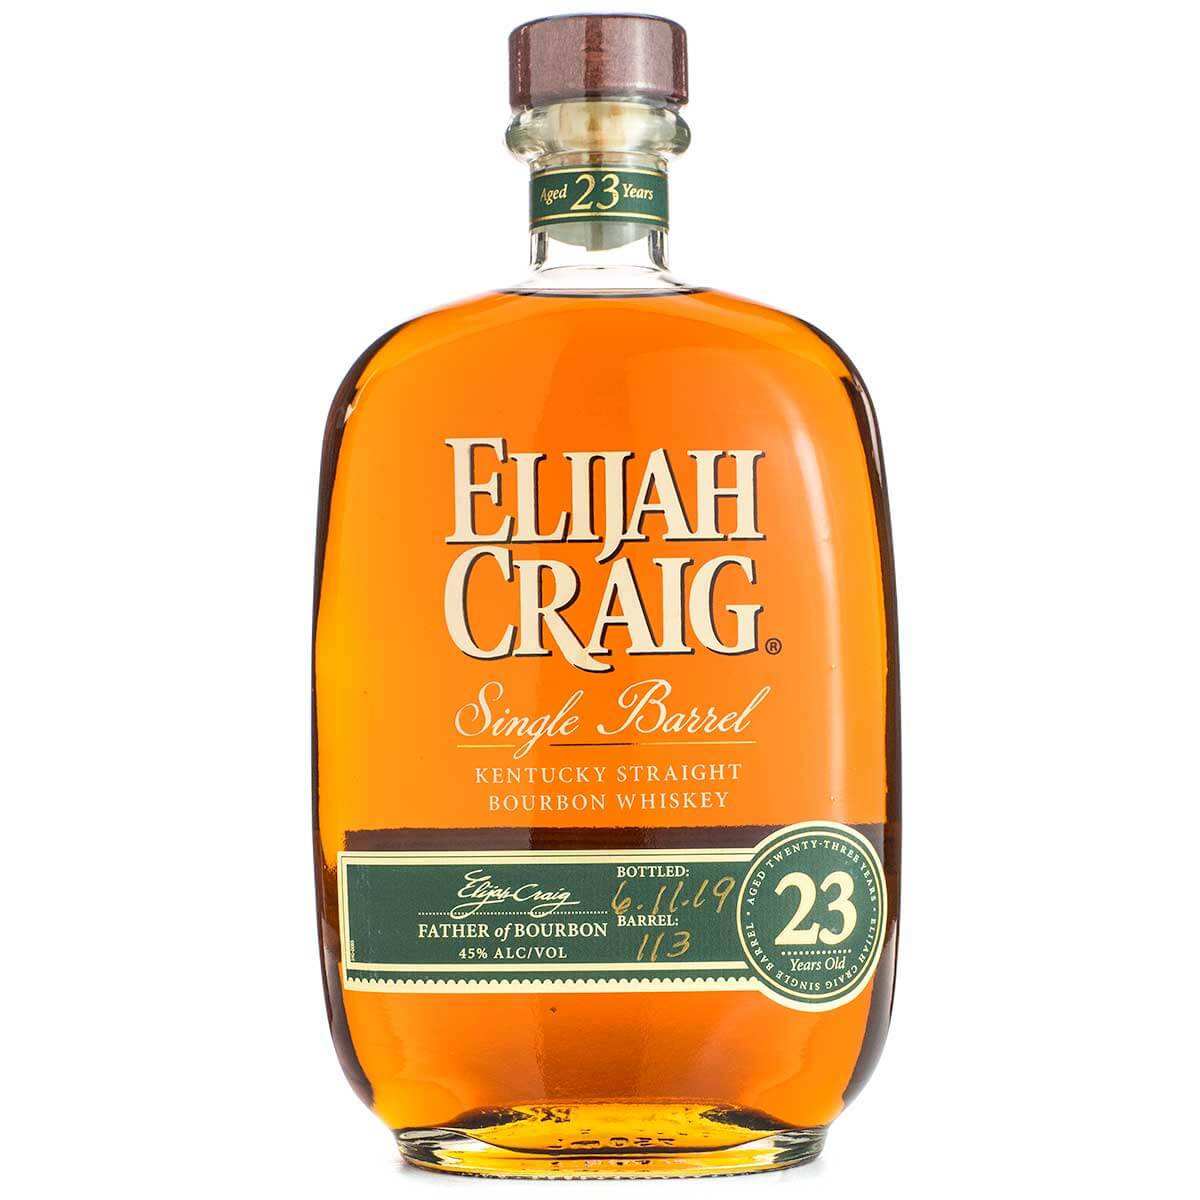 Elijah Craig 23 Year Old Single Barrel bottle